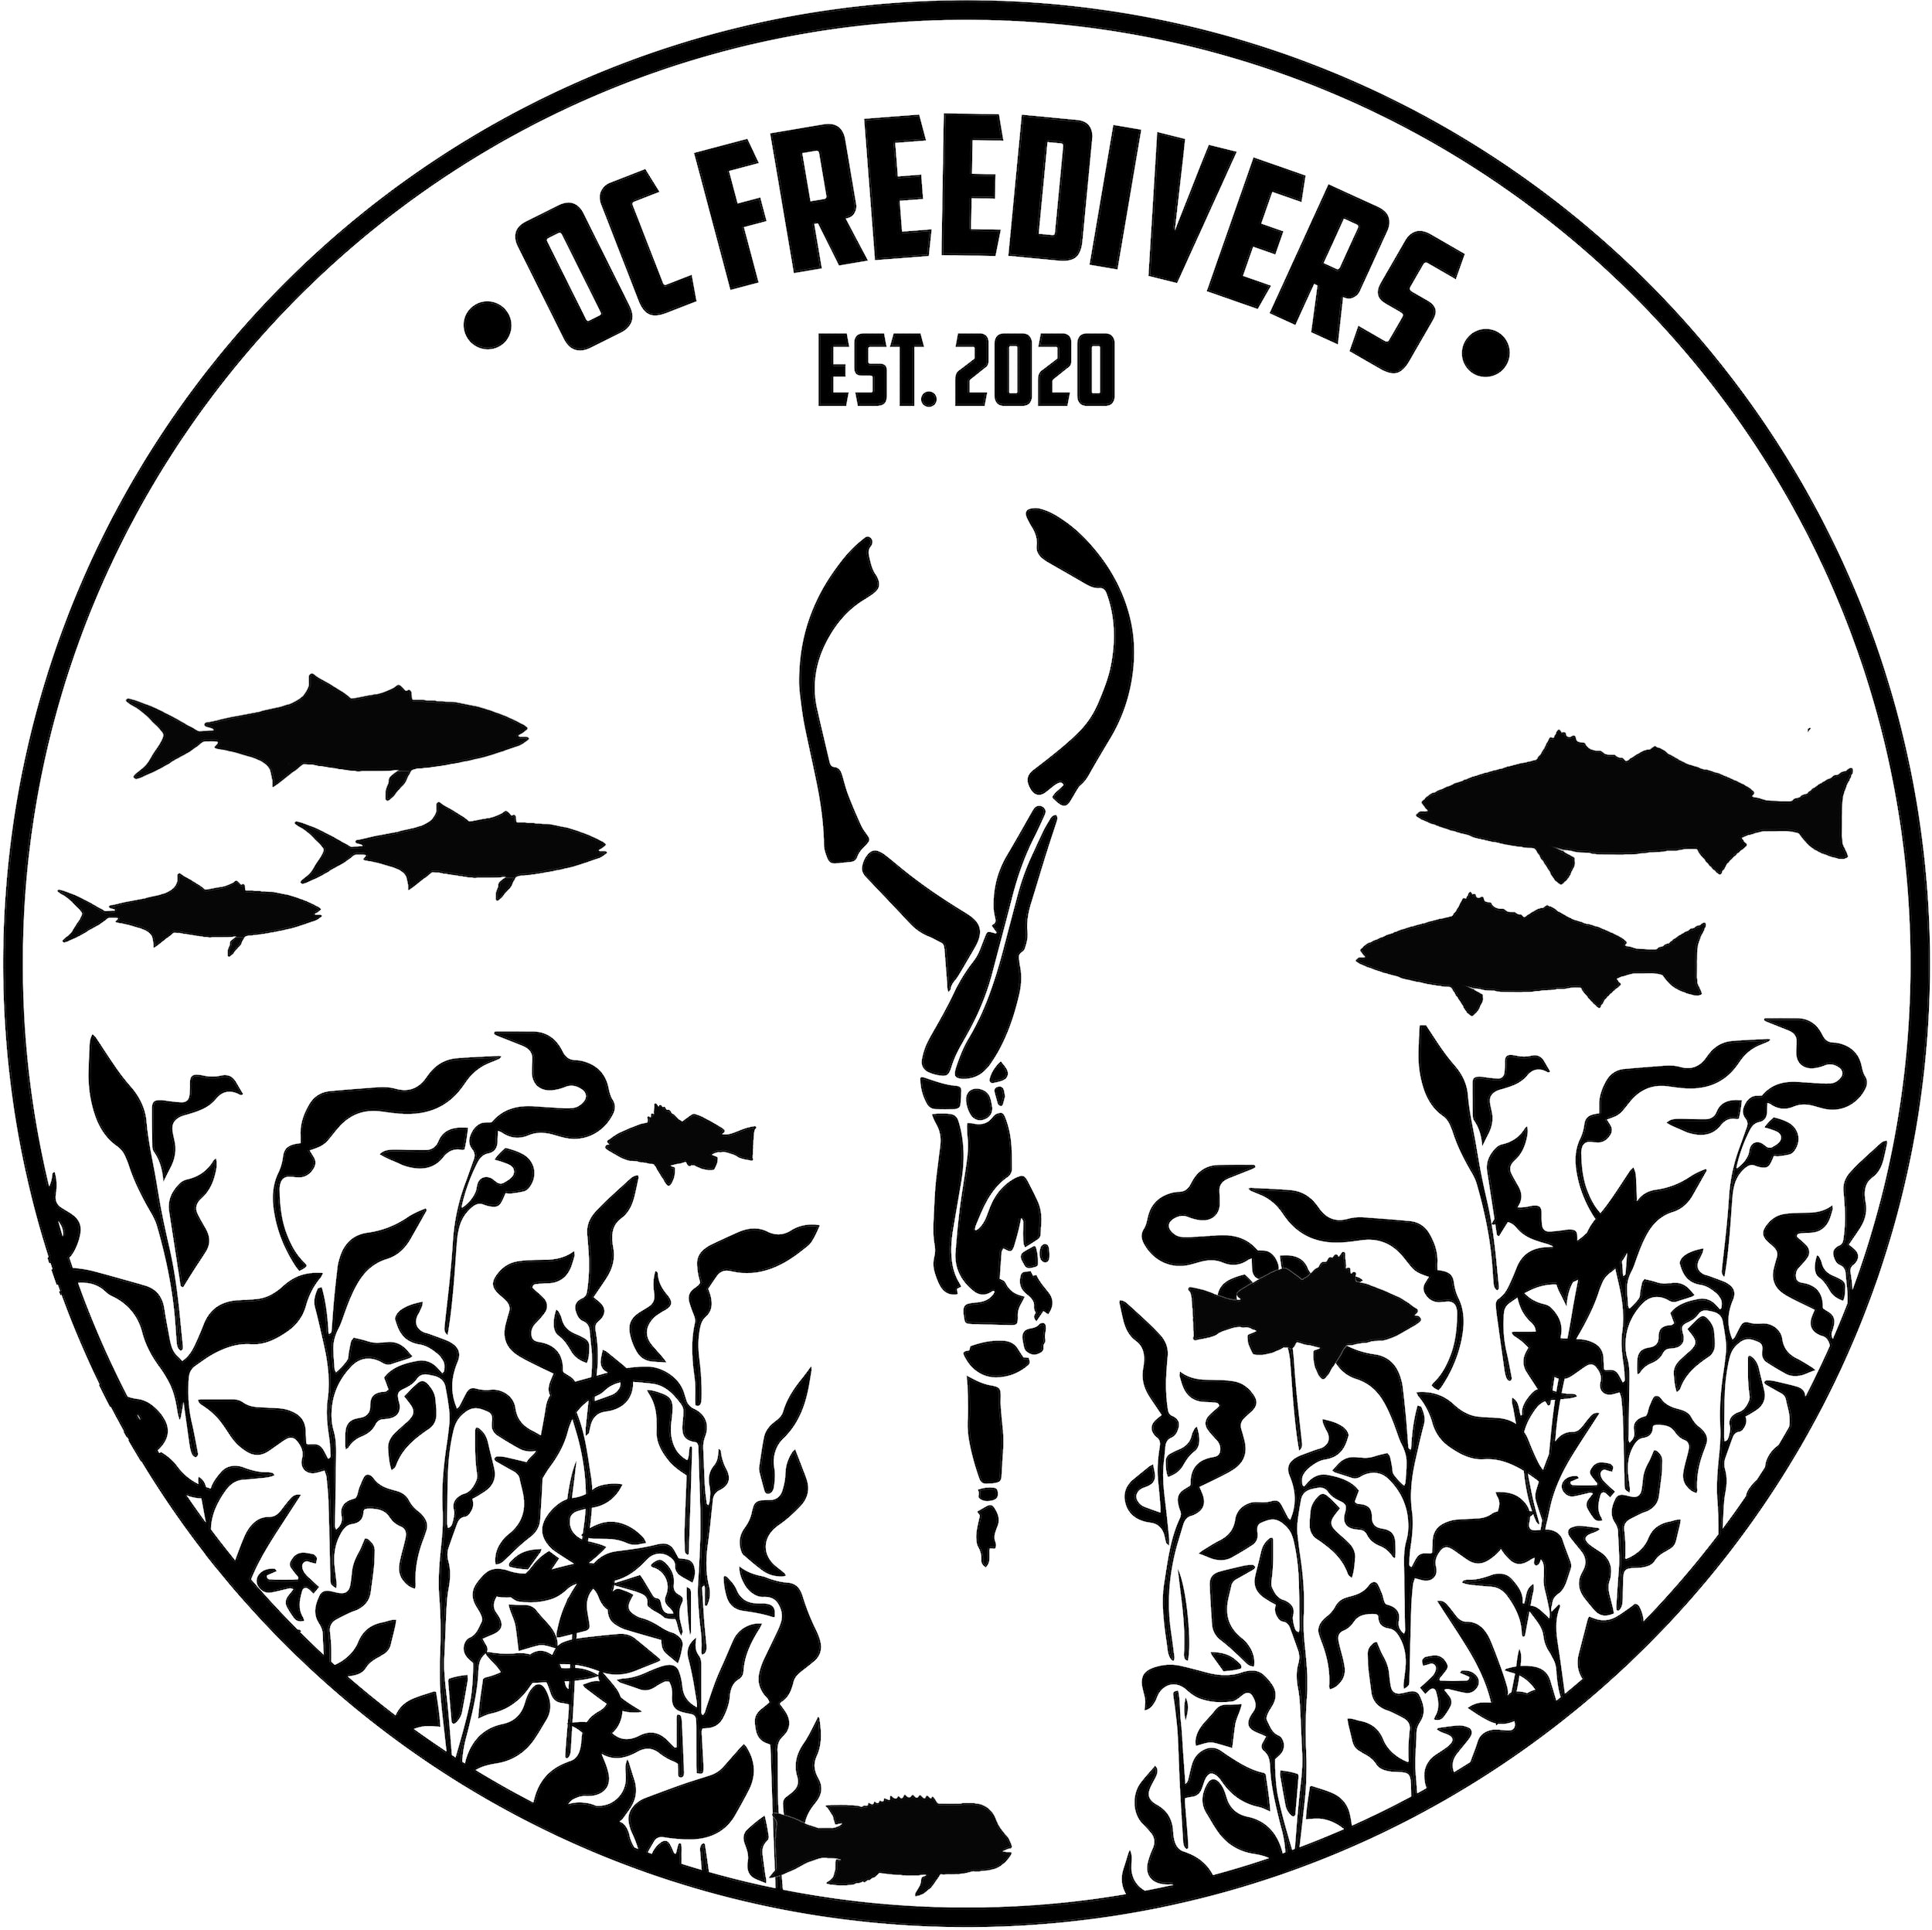 OC Freedivers Club Membership